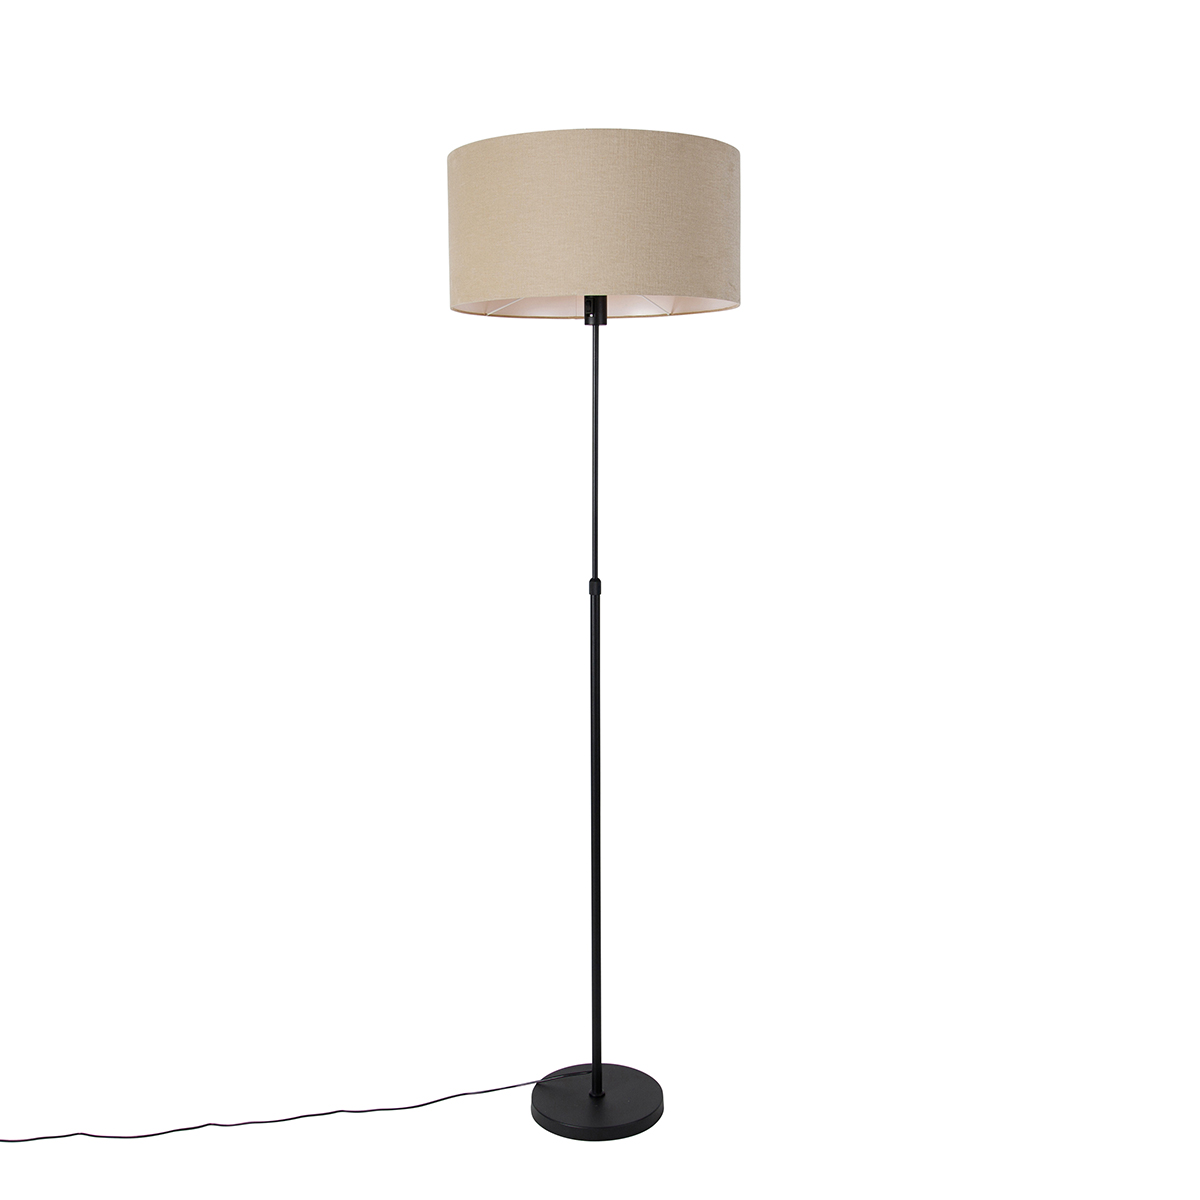 Floor lamp black adjustable with shade light brown 50 cm - Parte